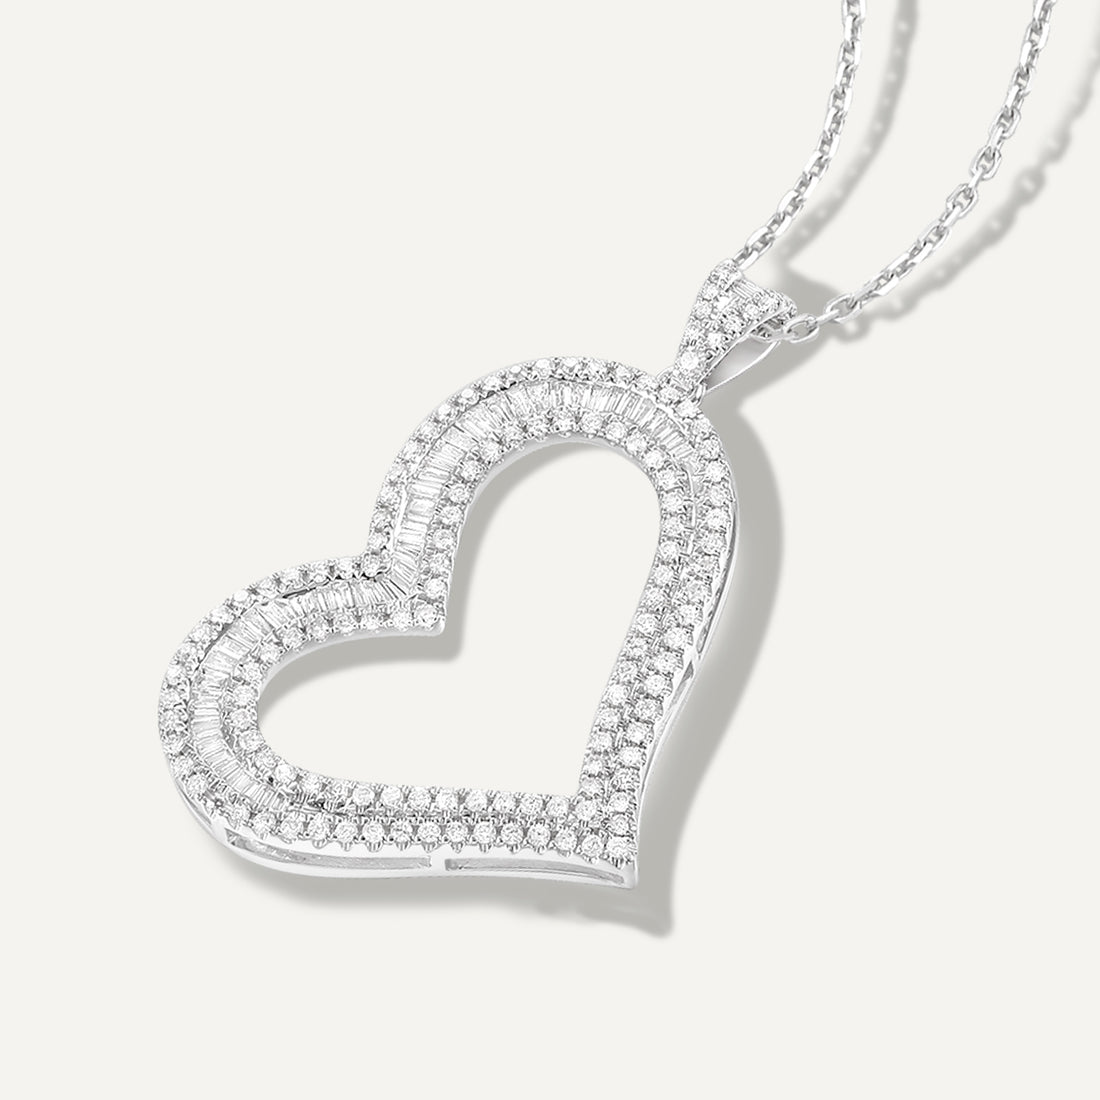 The Language of Diamonds: The secret behind the diamond heart necklace.